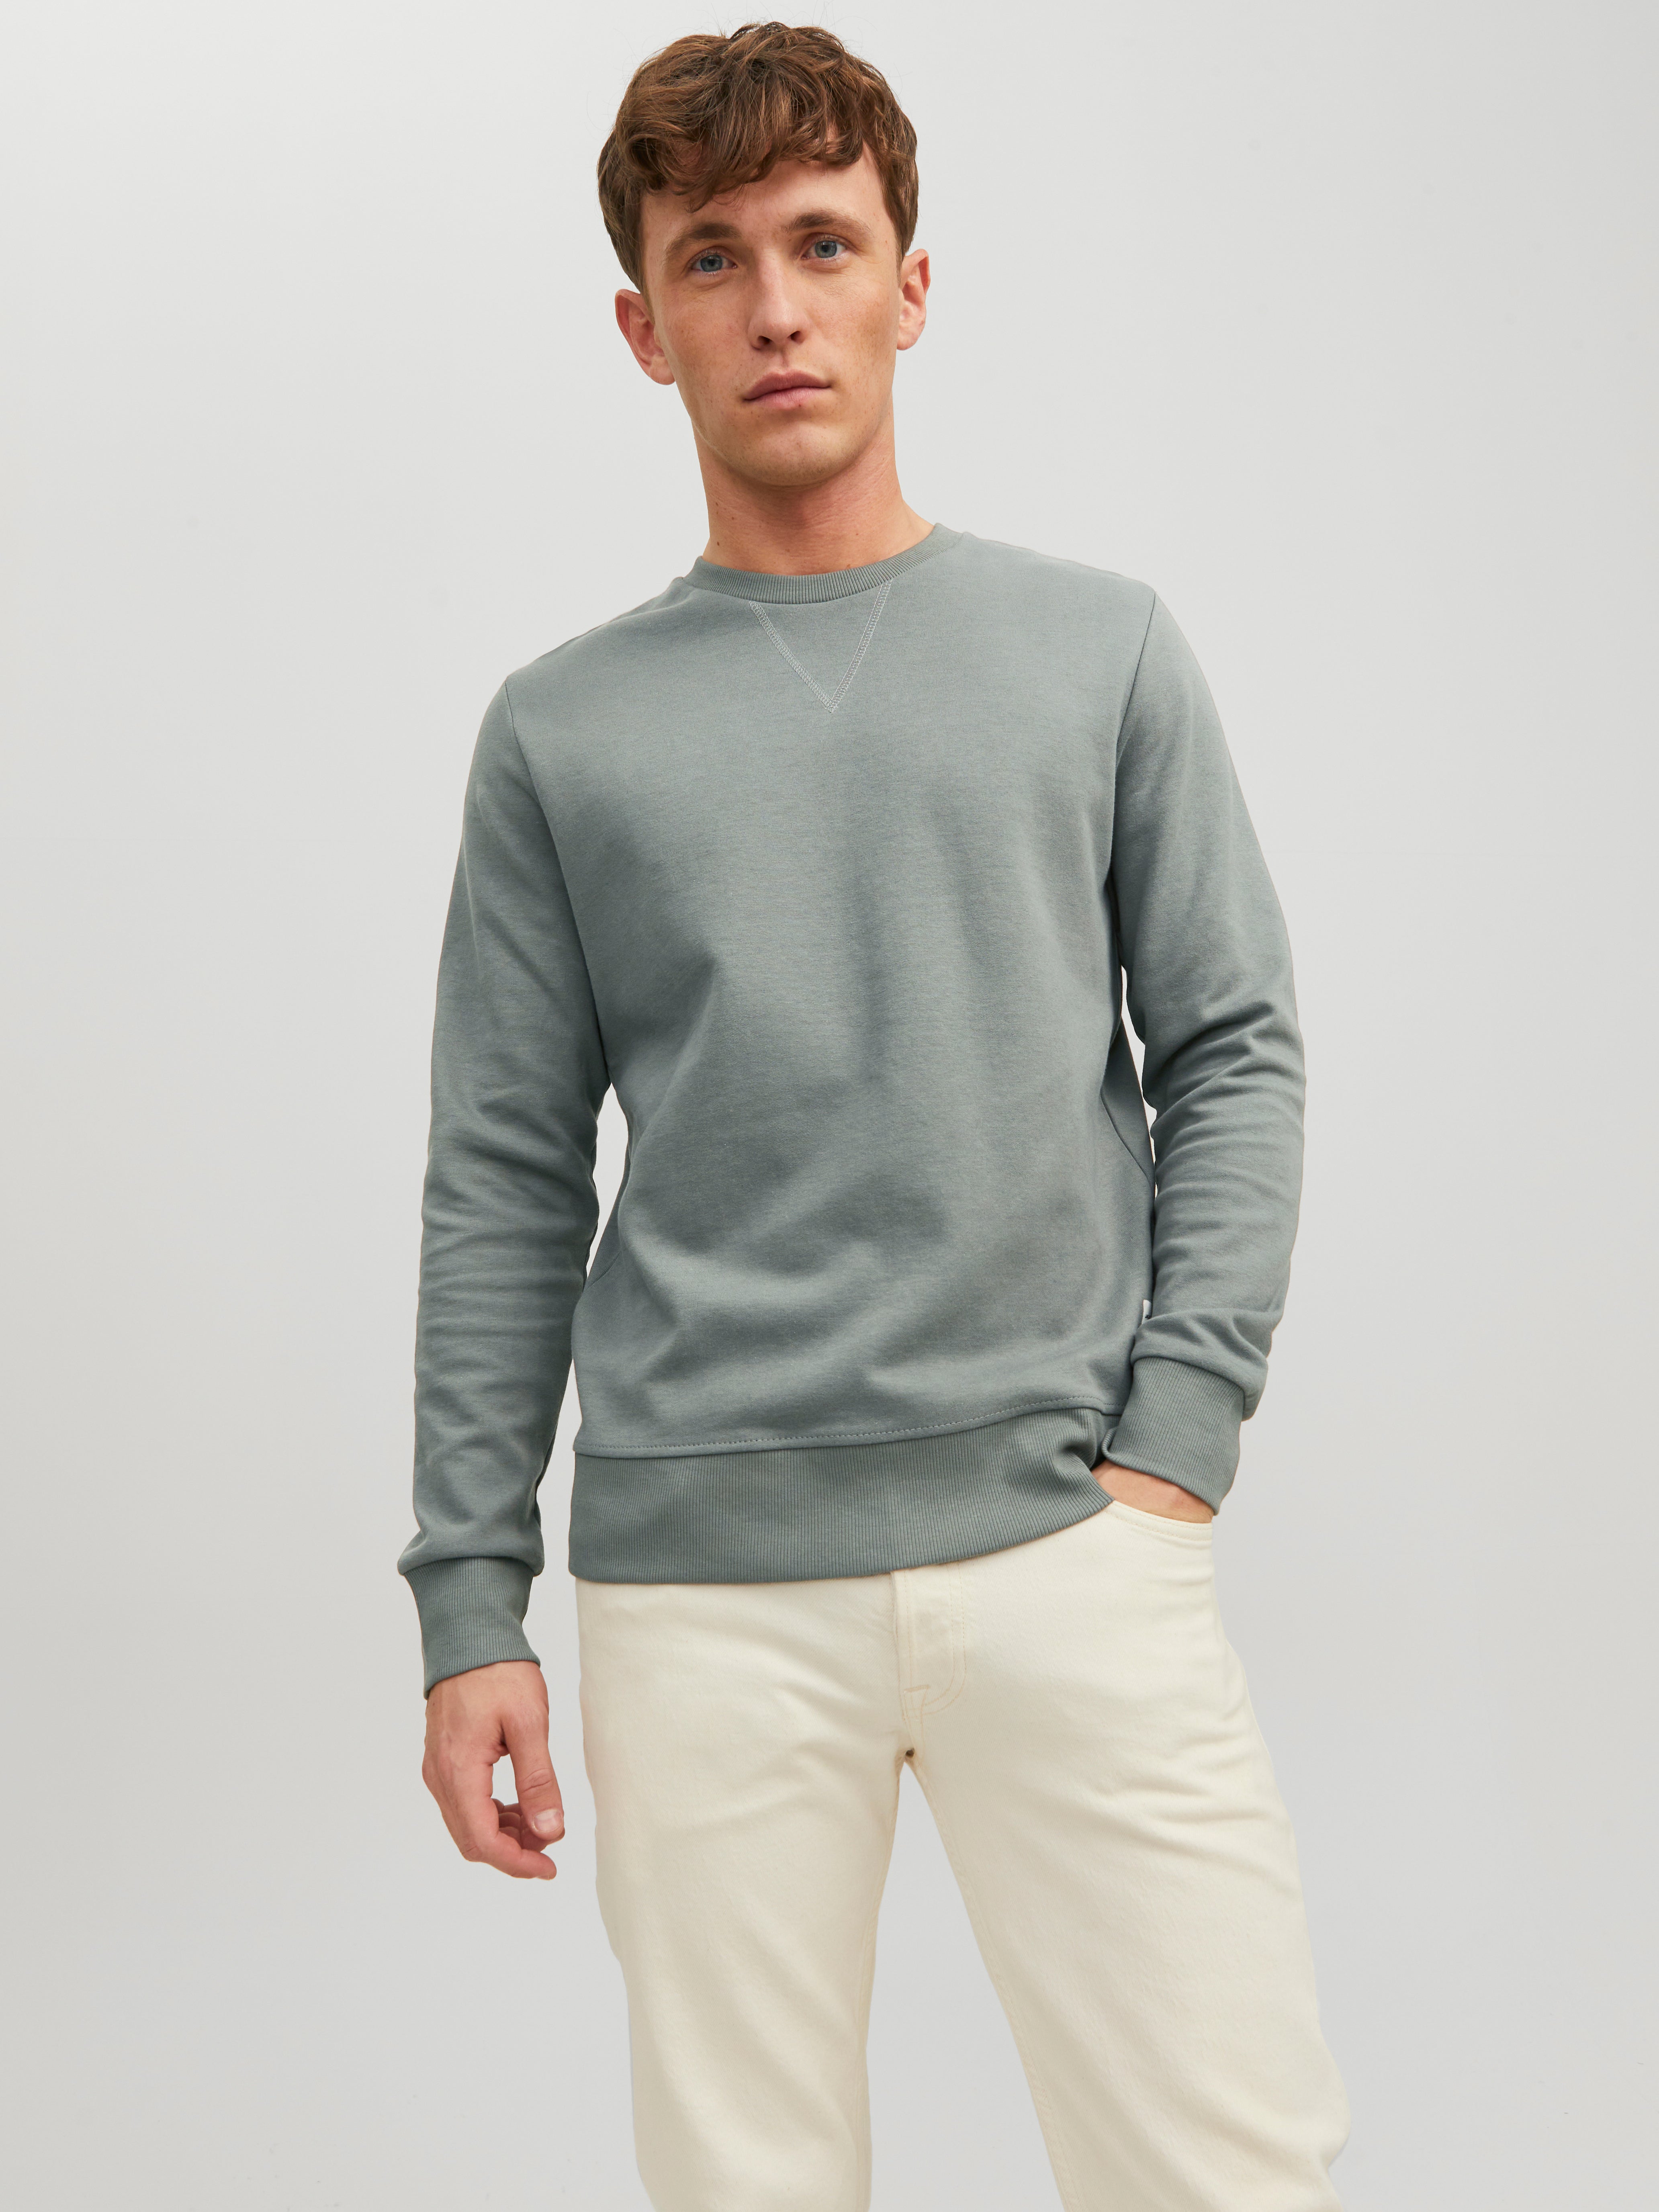 MEN FASHION Jumpers & Sweatshirts Print discount 56% Jack & Jones sweatshirt Green/Multicolored M 